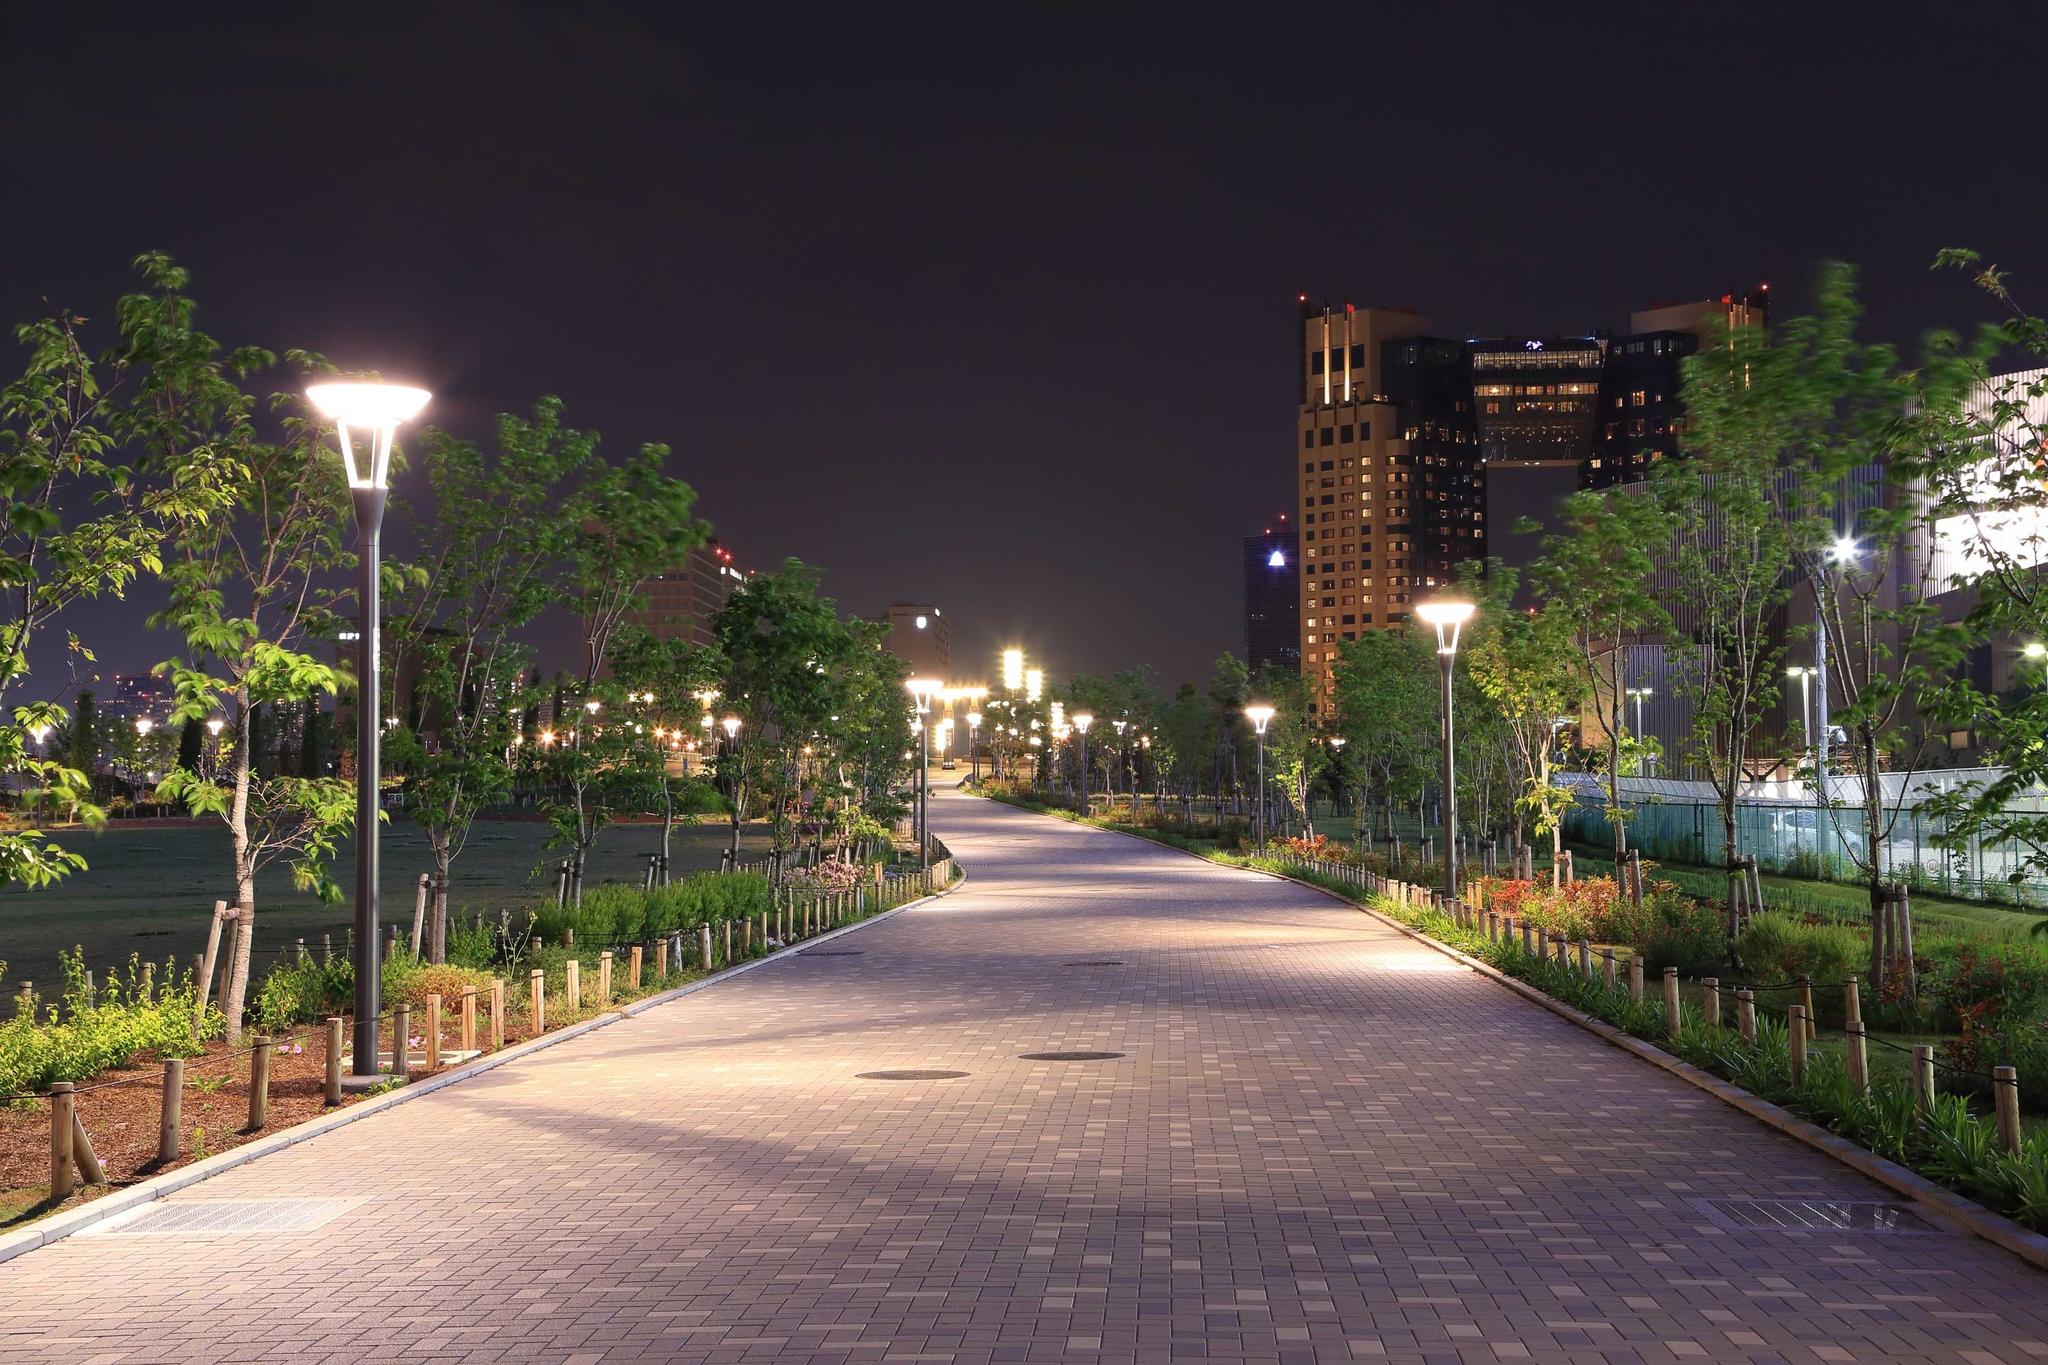 City park path at night